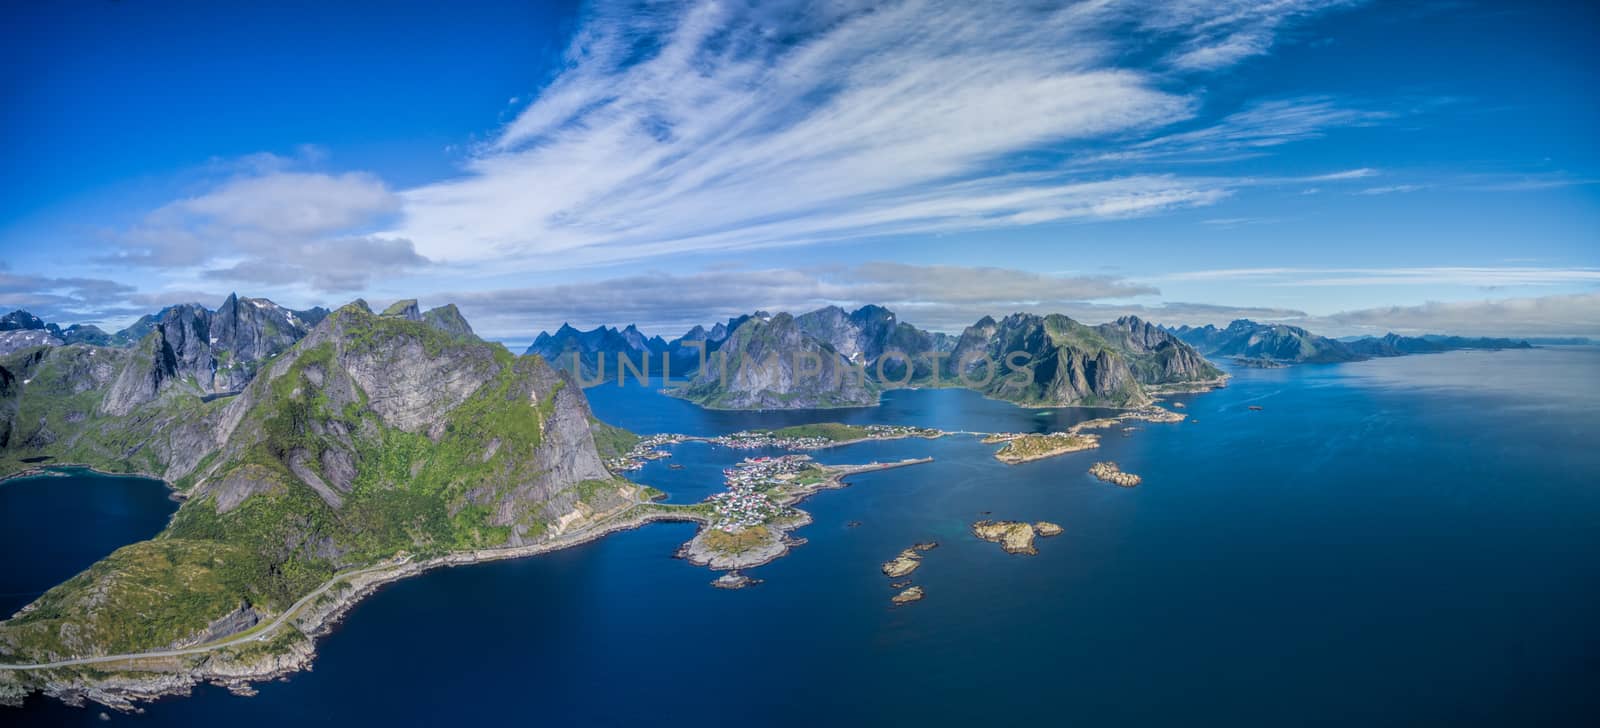 Panorama of Lofoten islands in Norway, aerial view of fishing town Reine